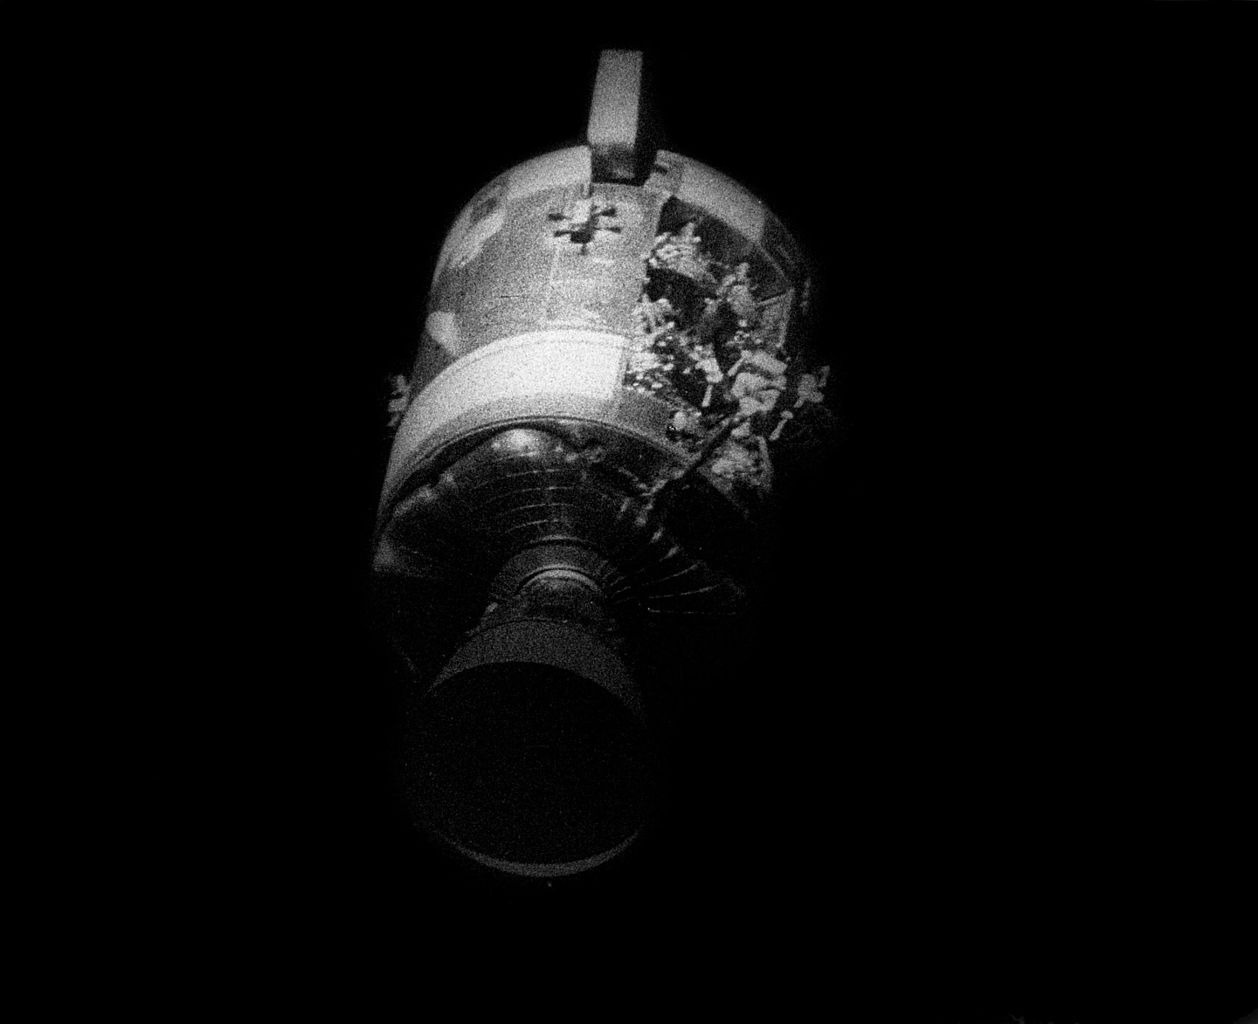 Apollo 13 Lunar service module